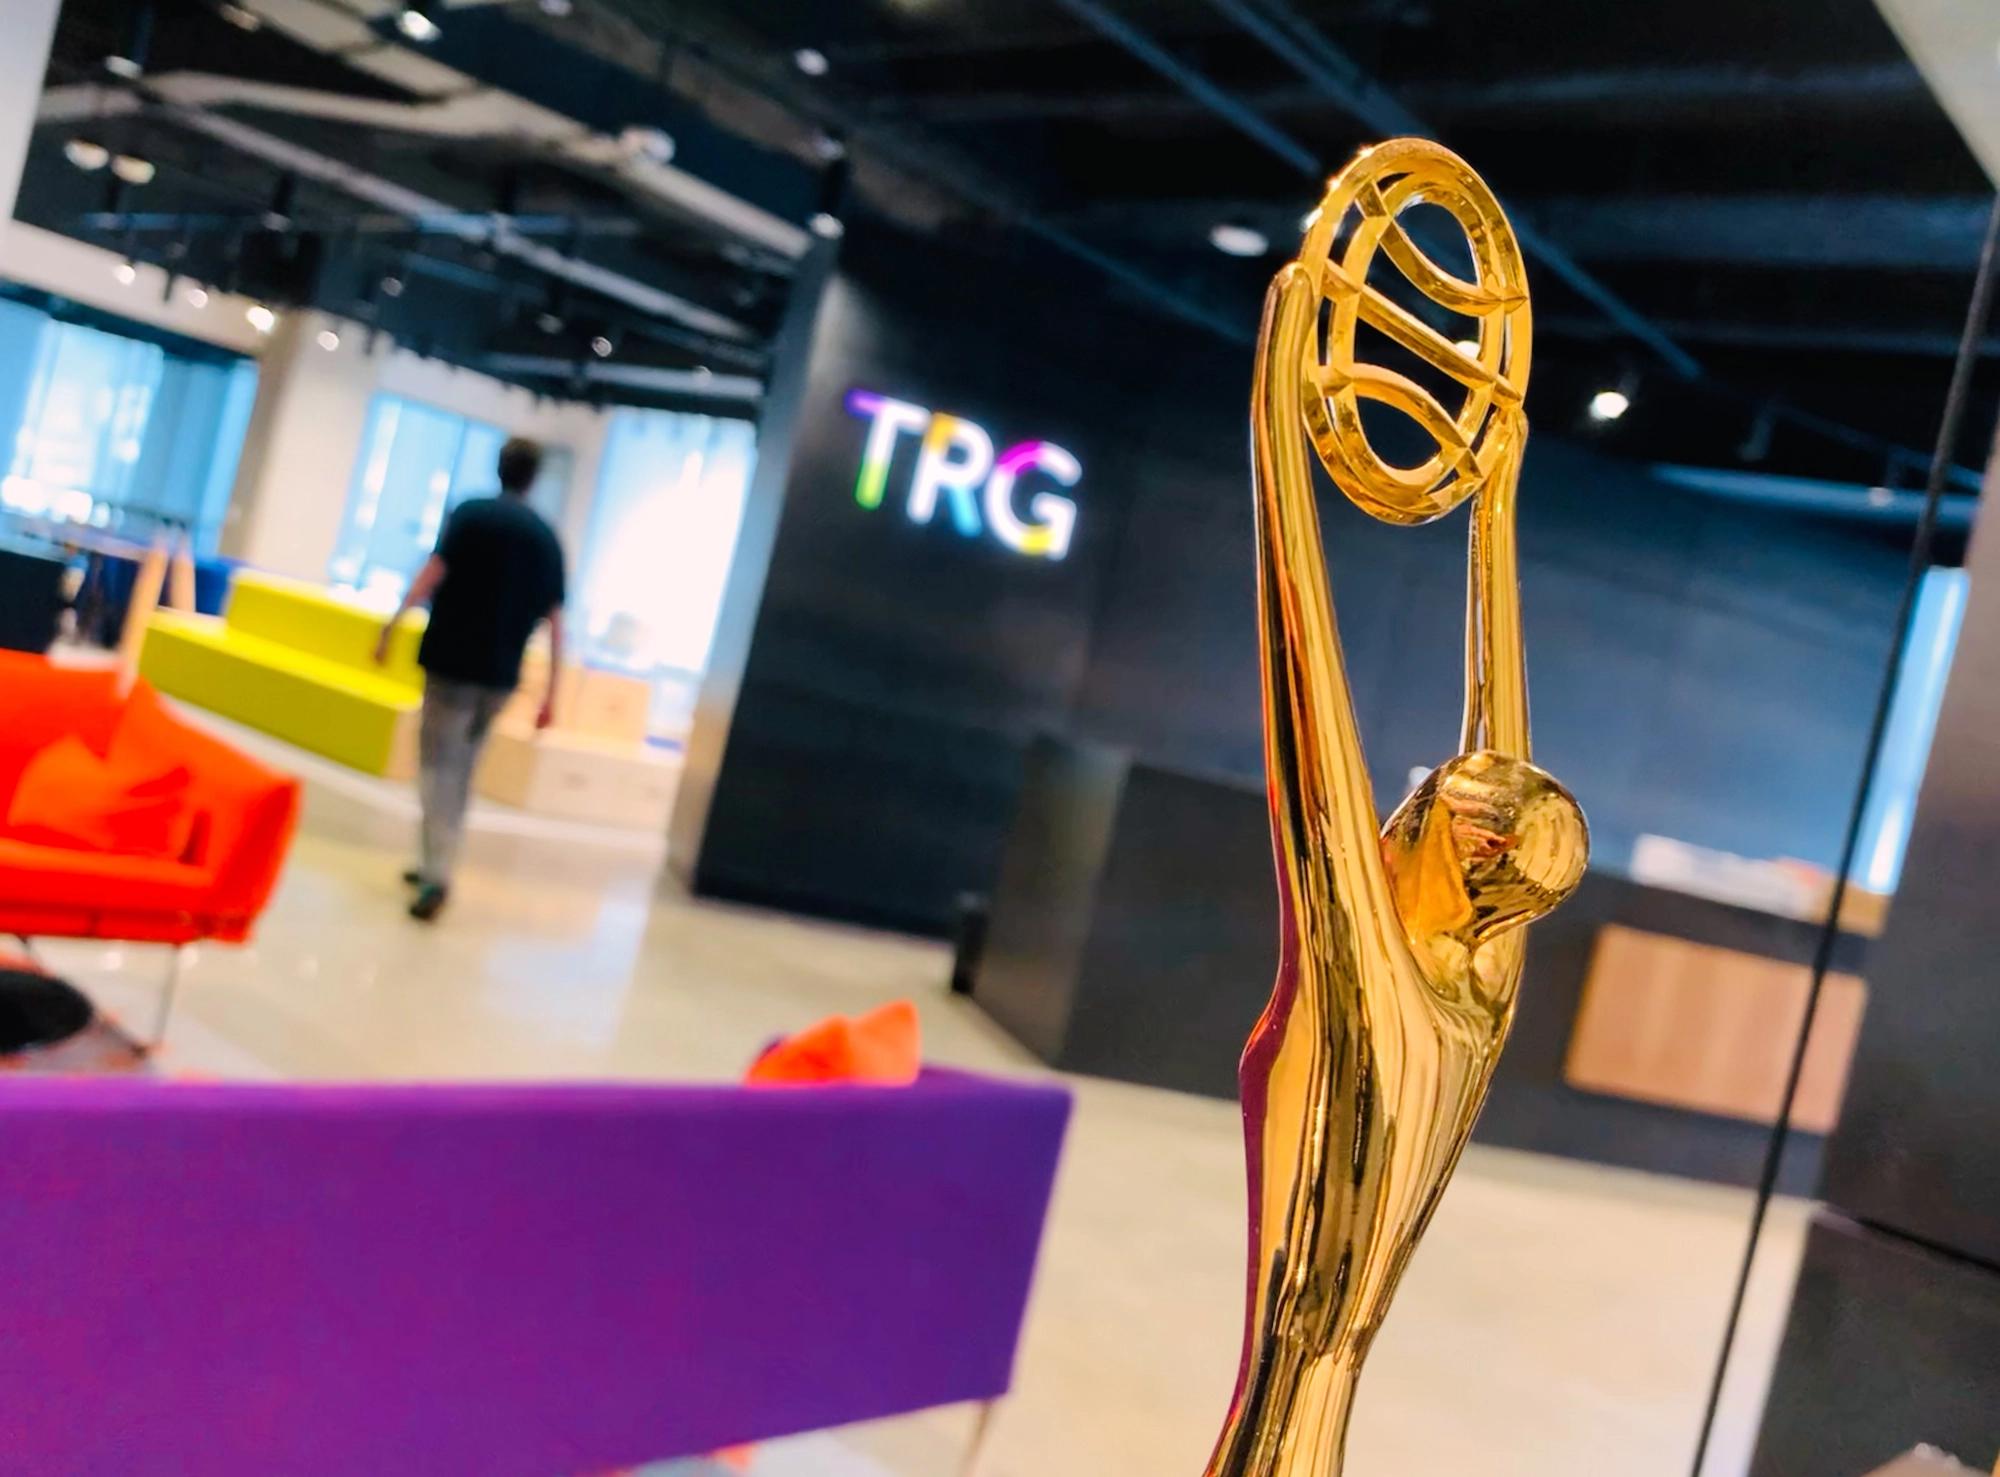 TRG lobby shot with award